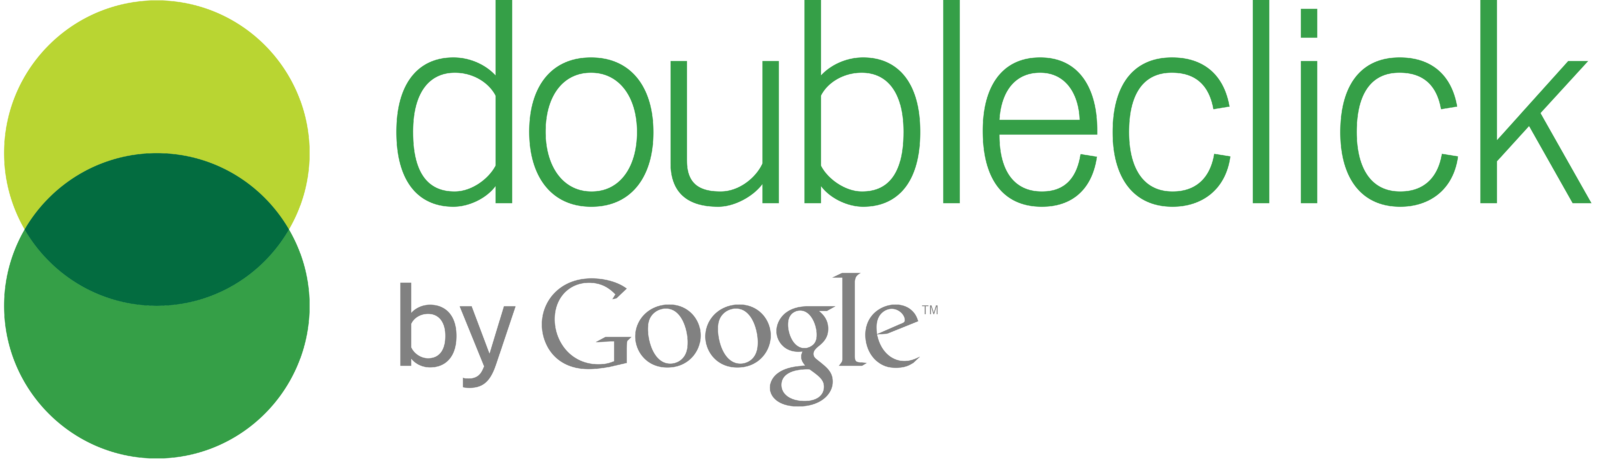 Doubleclick Logo